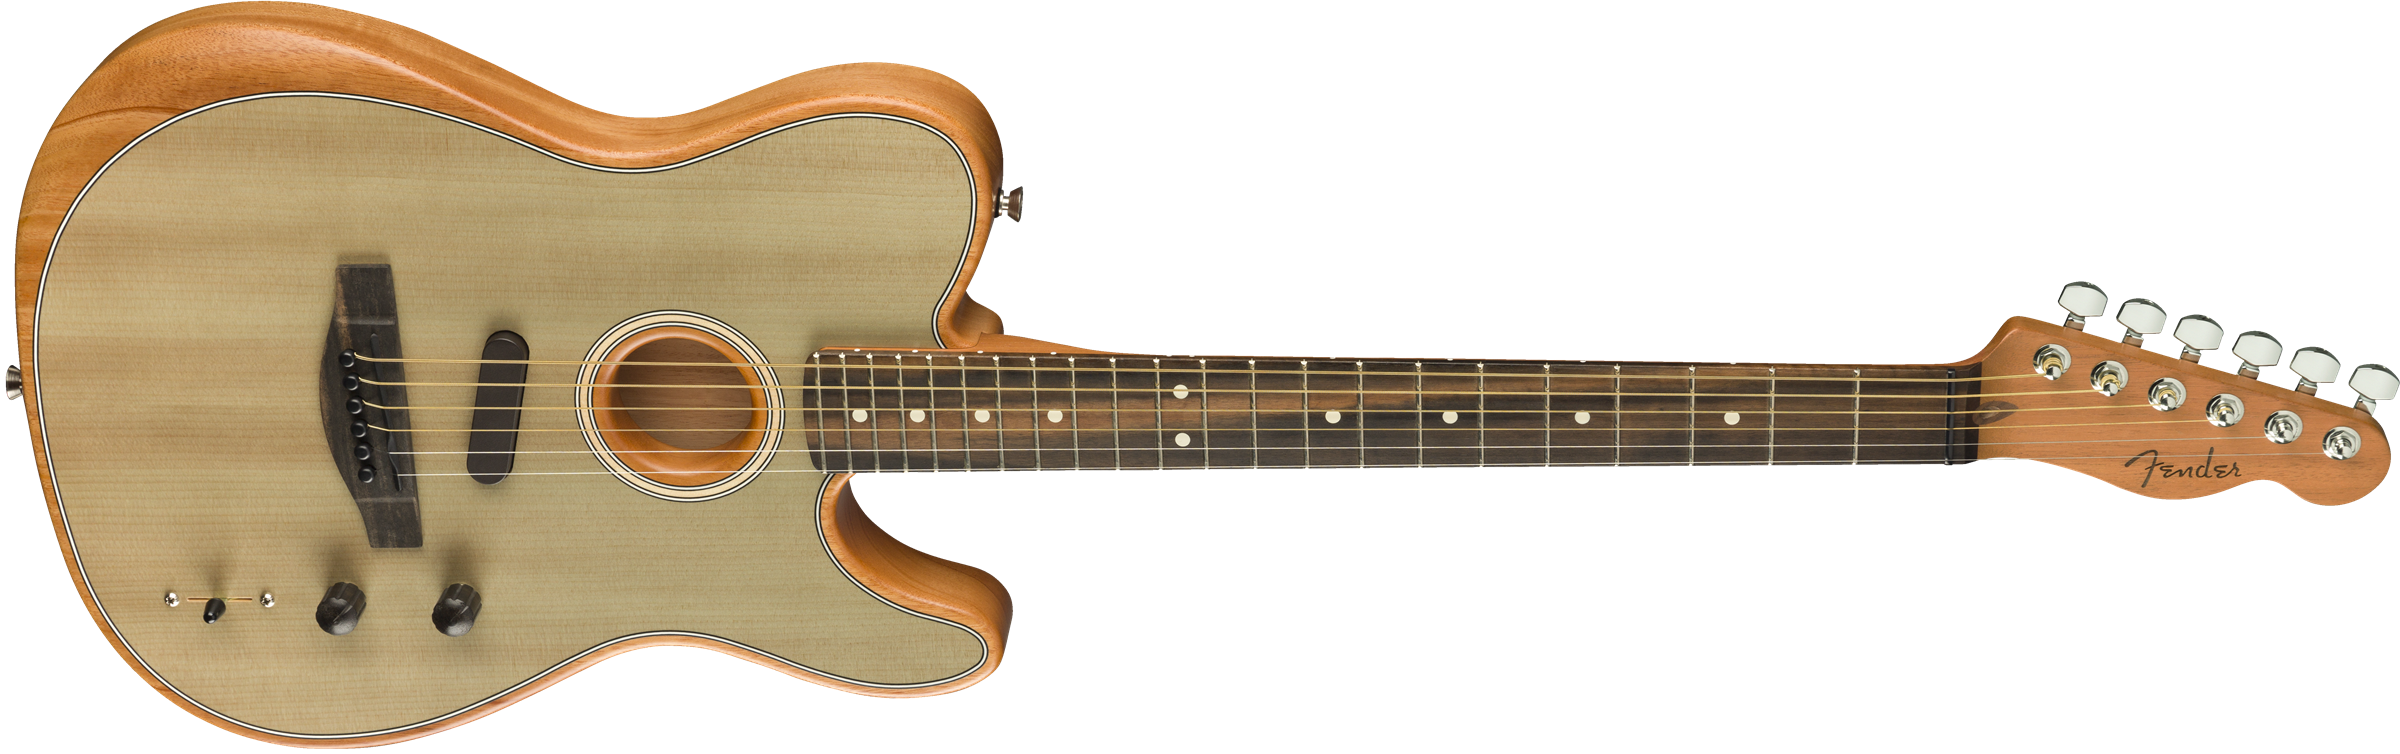 Fender Tele American Acoustasonic Usa Eb - Sonic Gray - Elektroakustische Gitarre - Variation 2